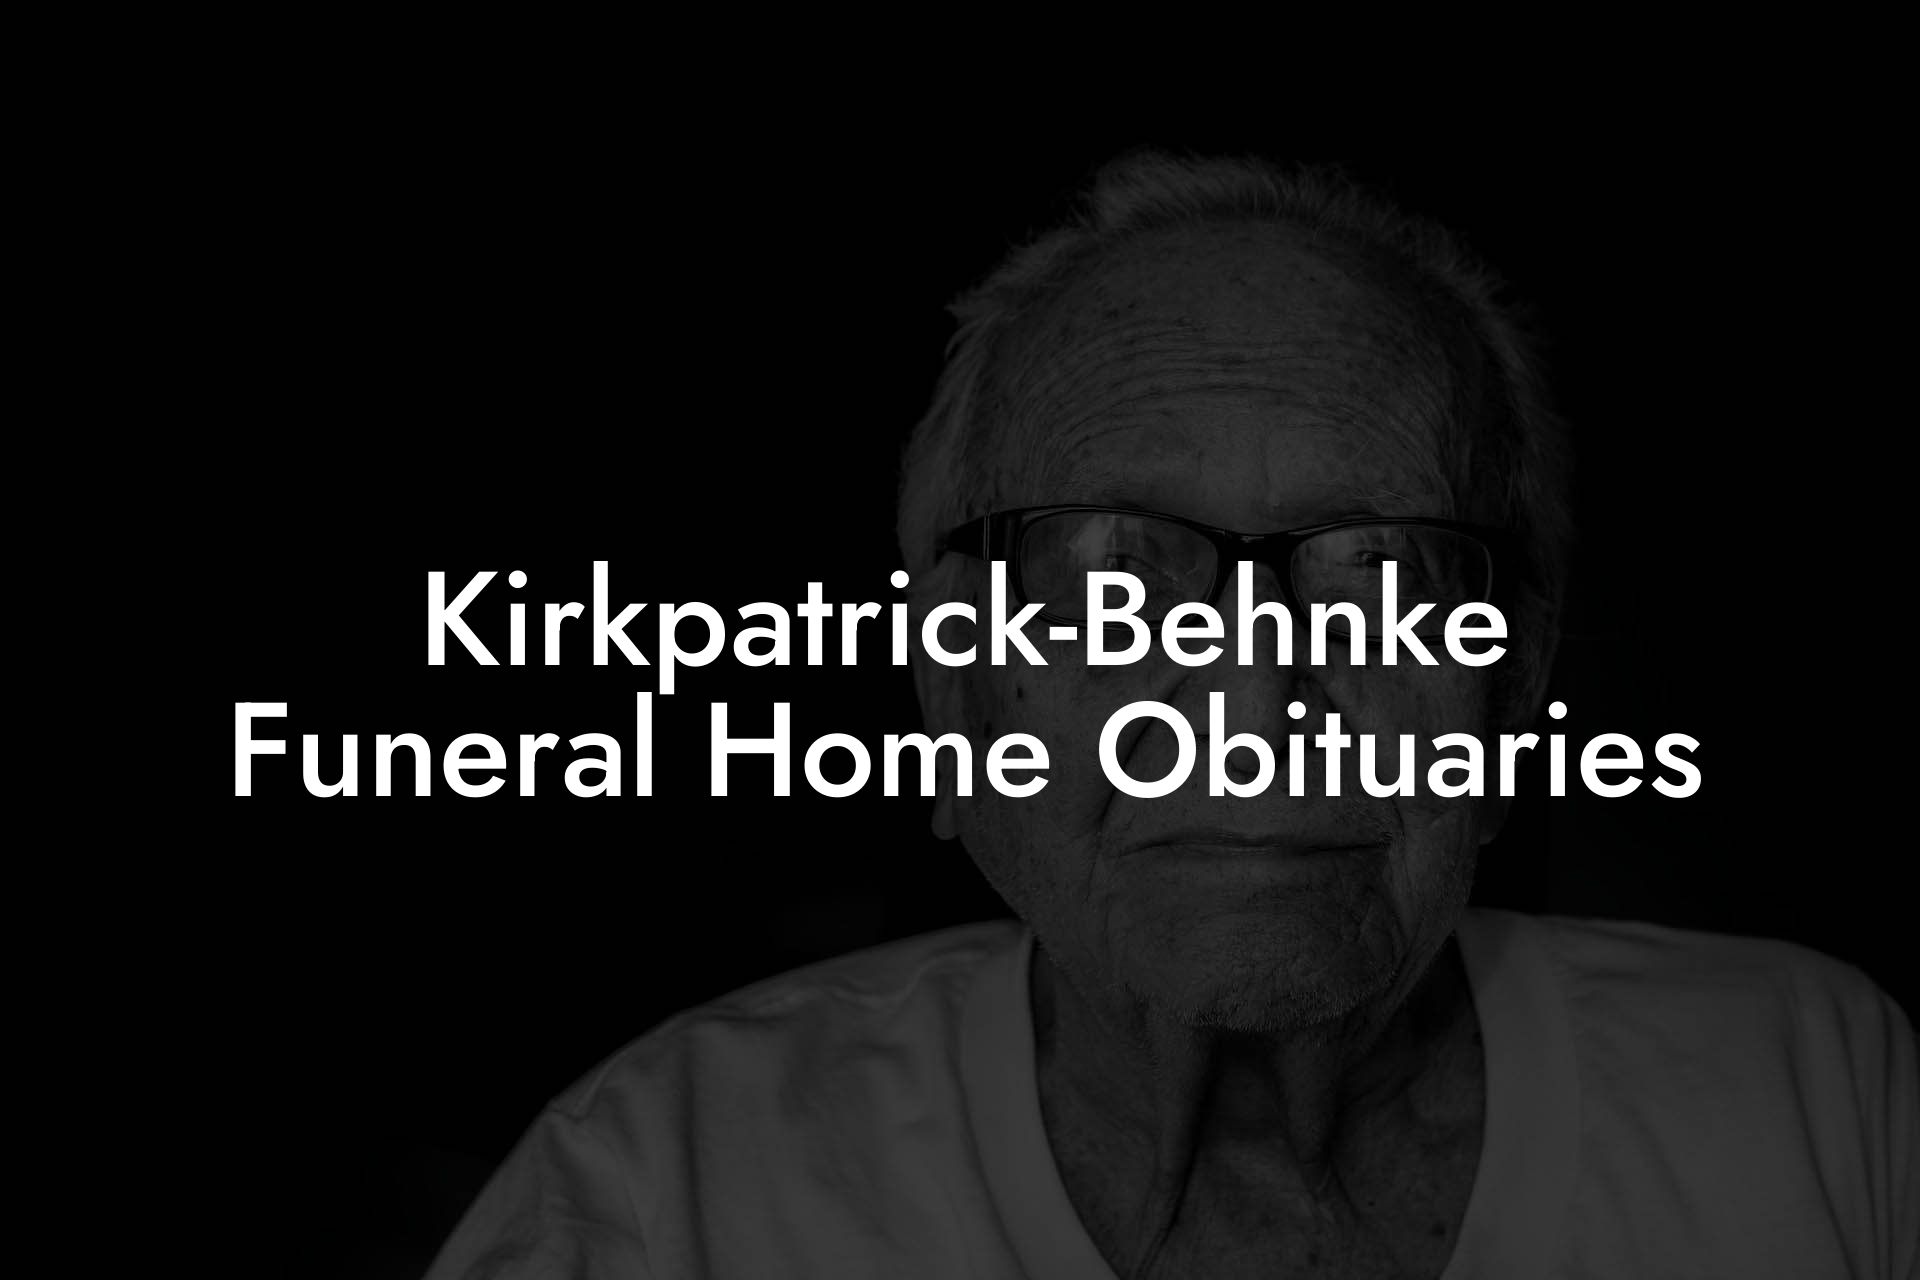 Kirkpatrick-Behnke Funeral Home Obituaries